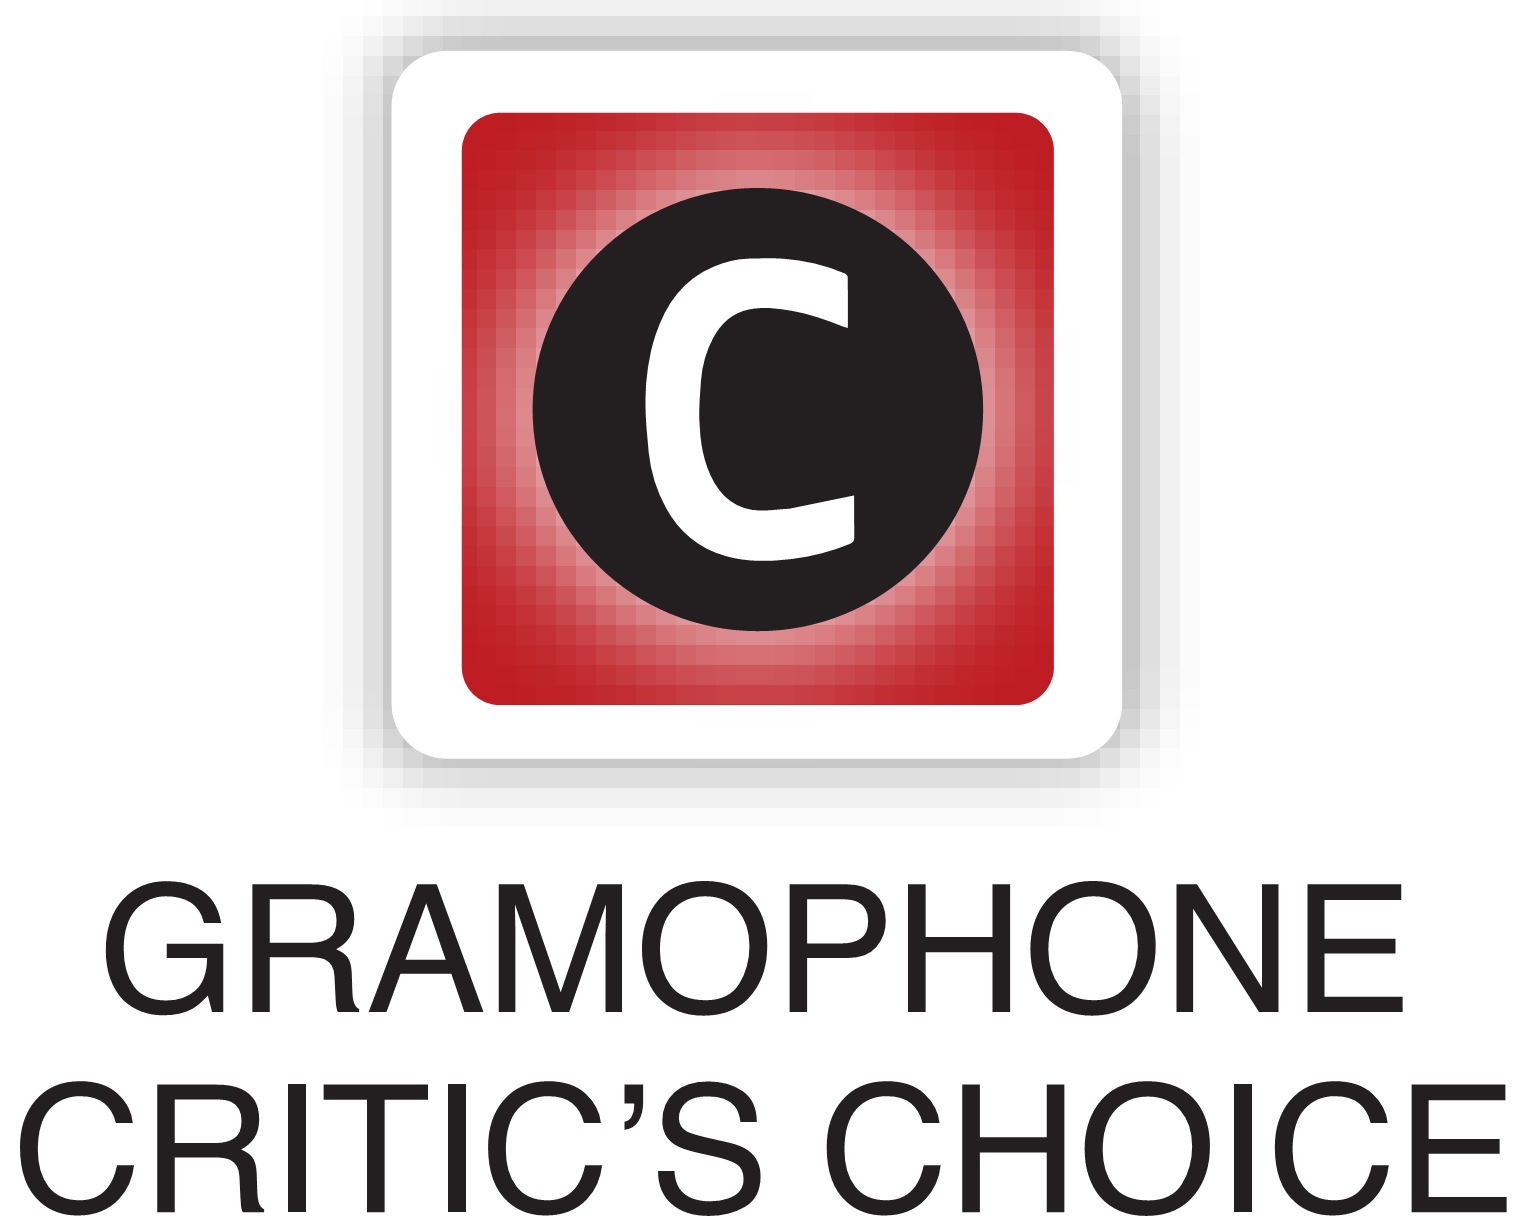 Gramophone: 'Critic’s Choice' (2012)